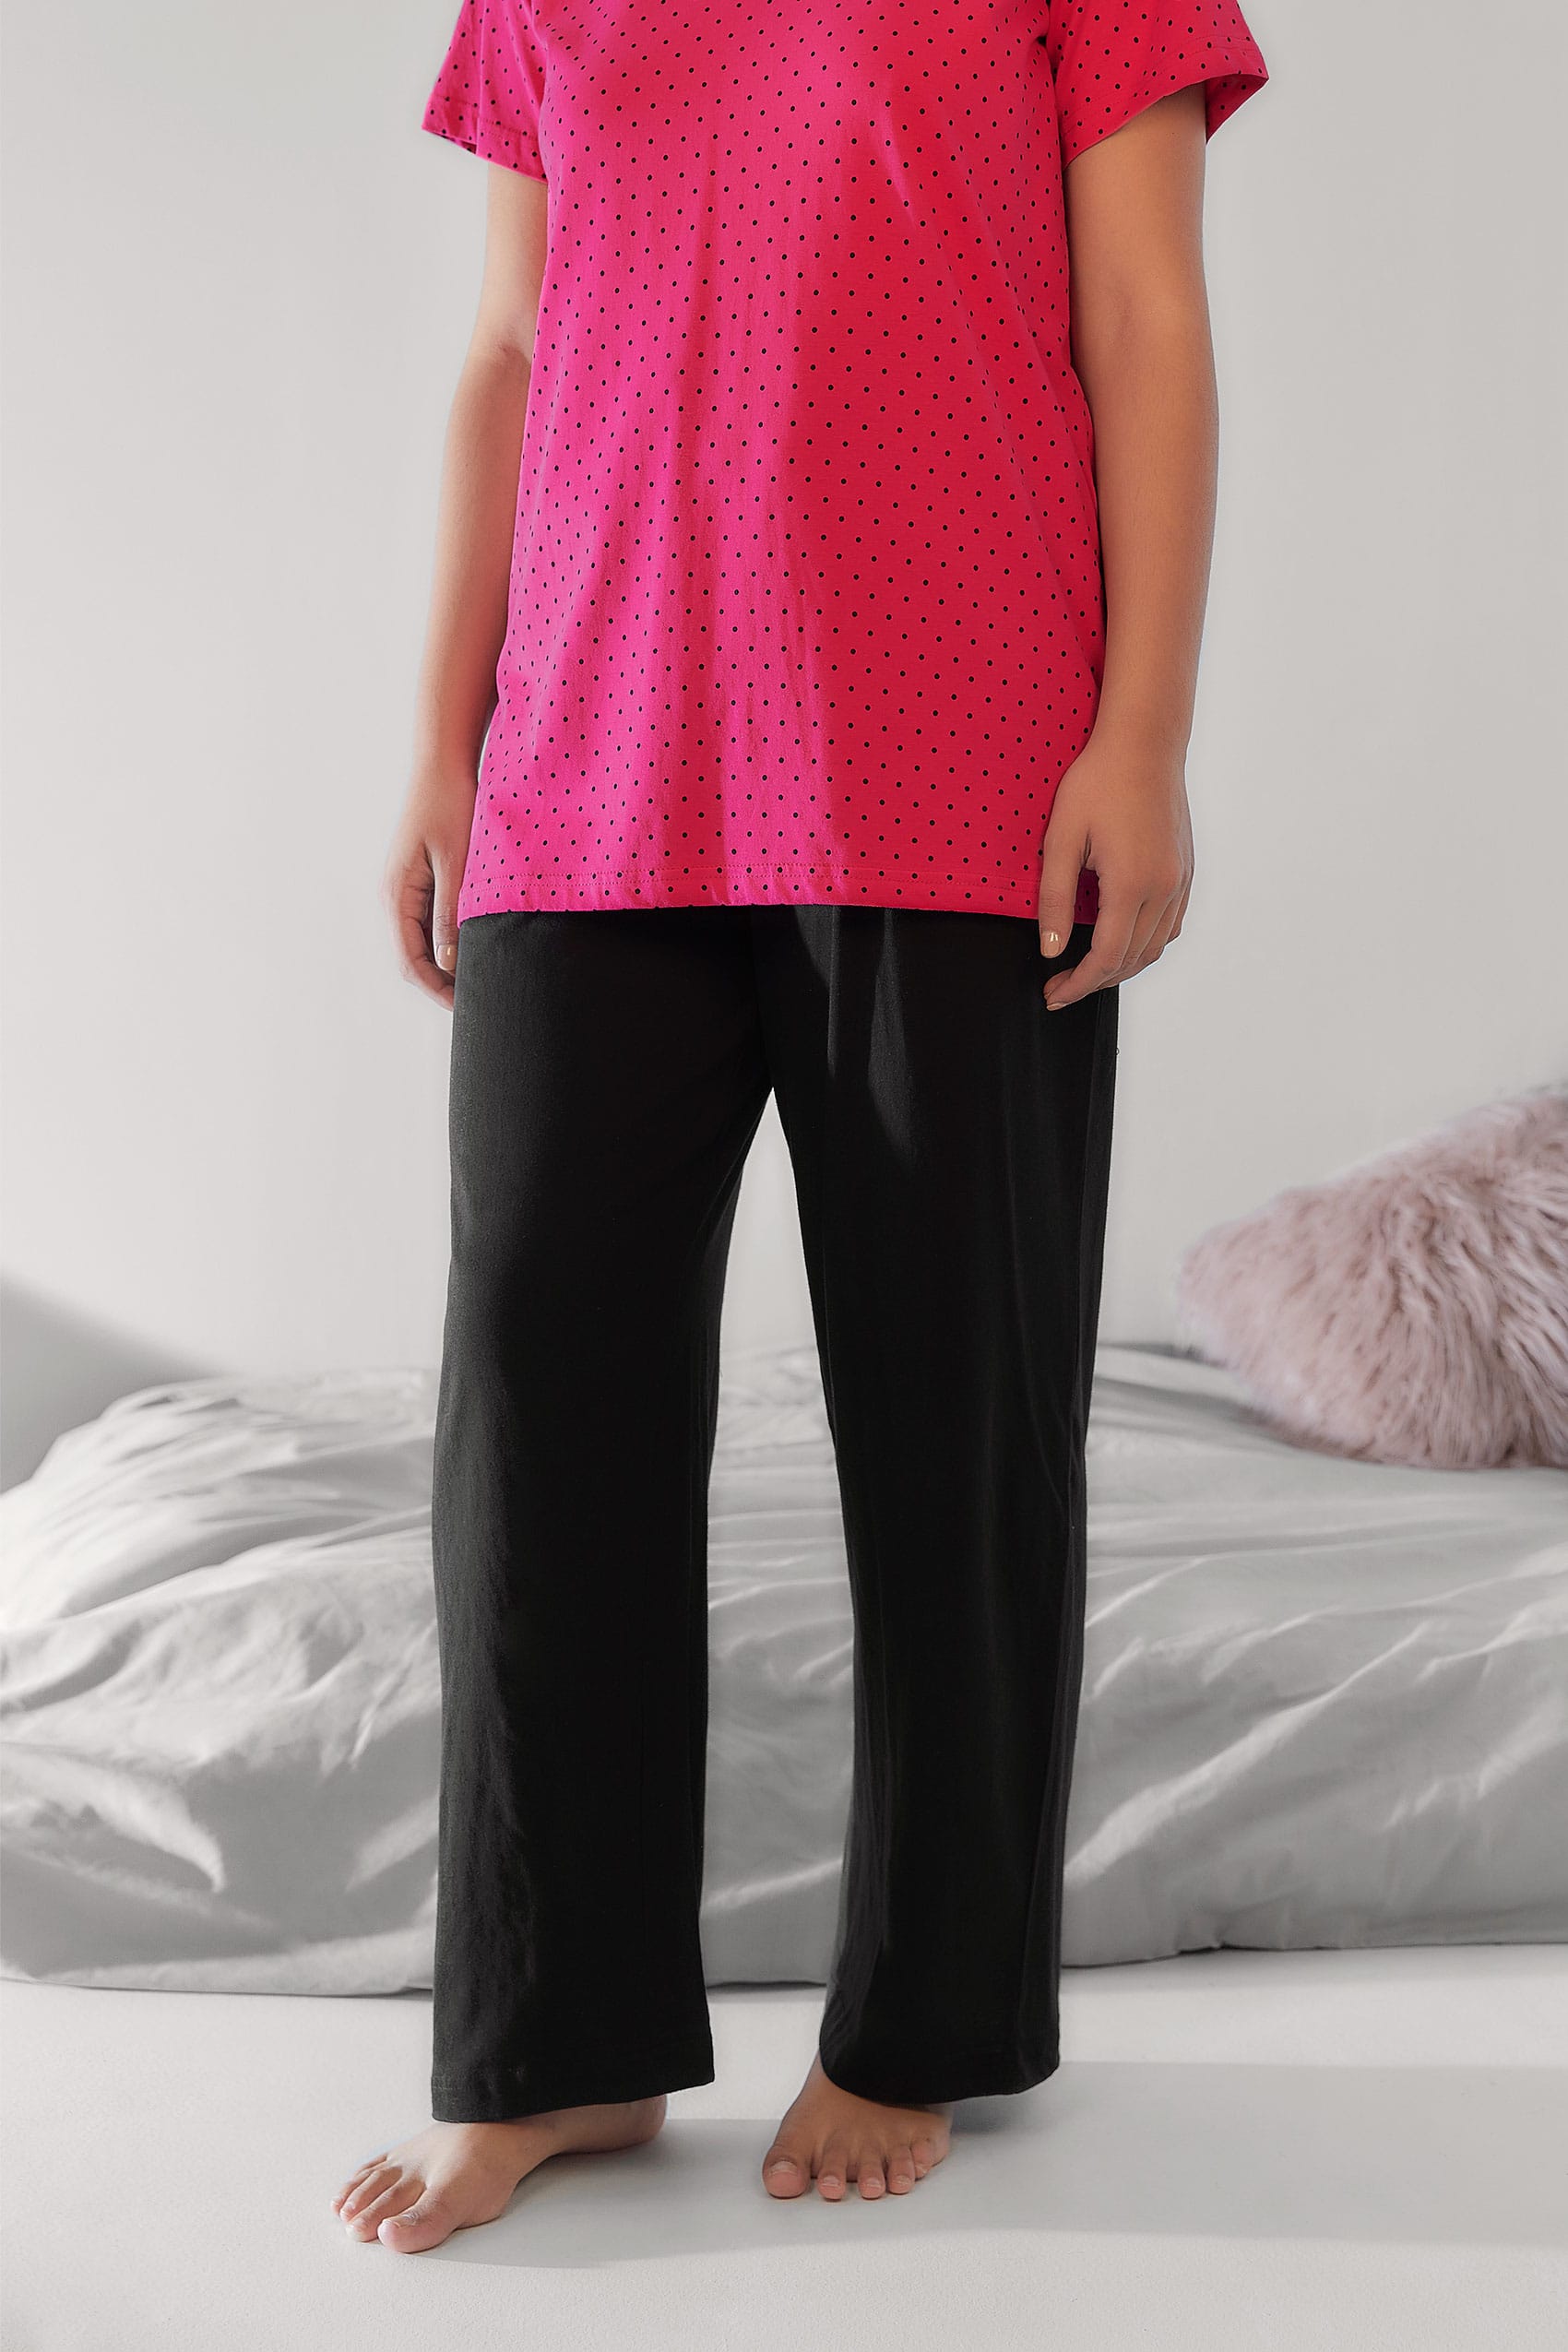 black basic cotton pyjama bottoms plus size 16 to 32